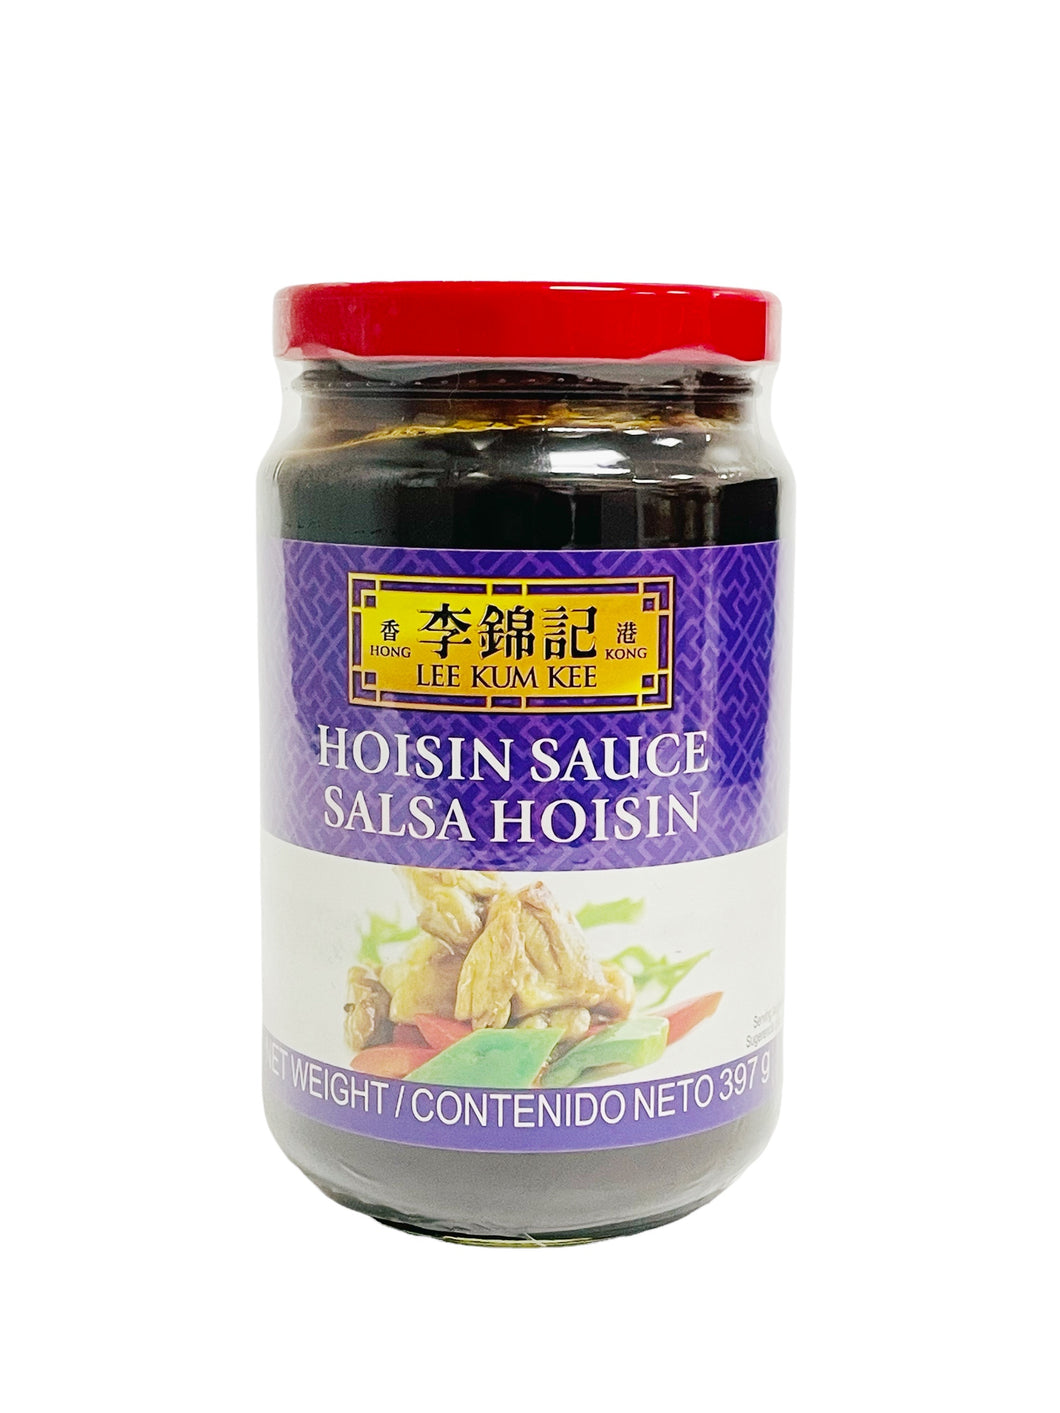 LKK Hoisin Sauce 397g李锦记海鲜酱